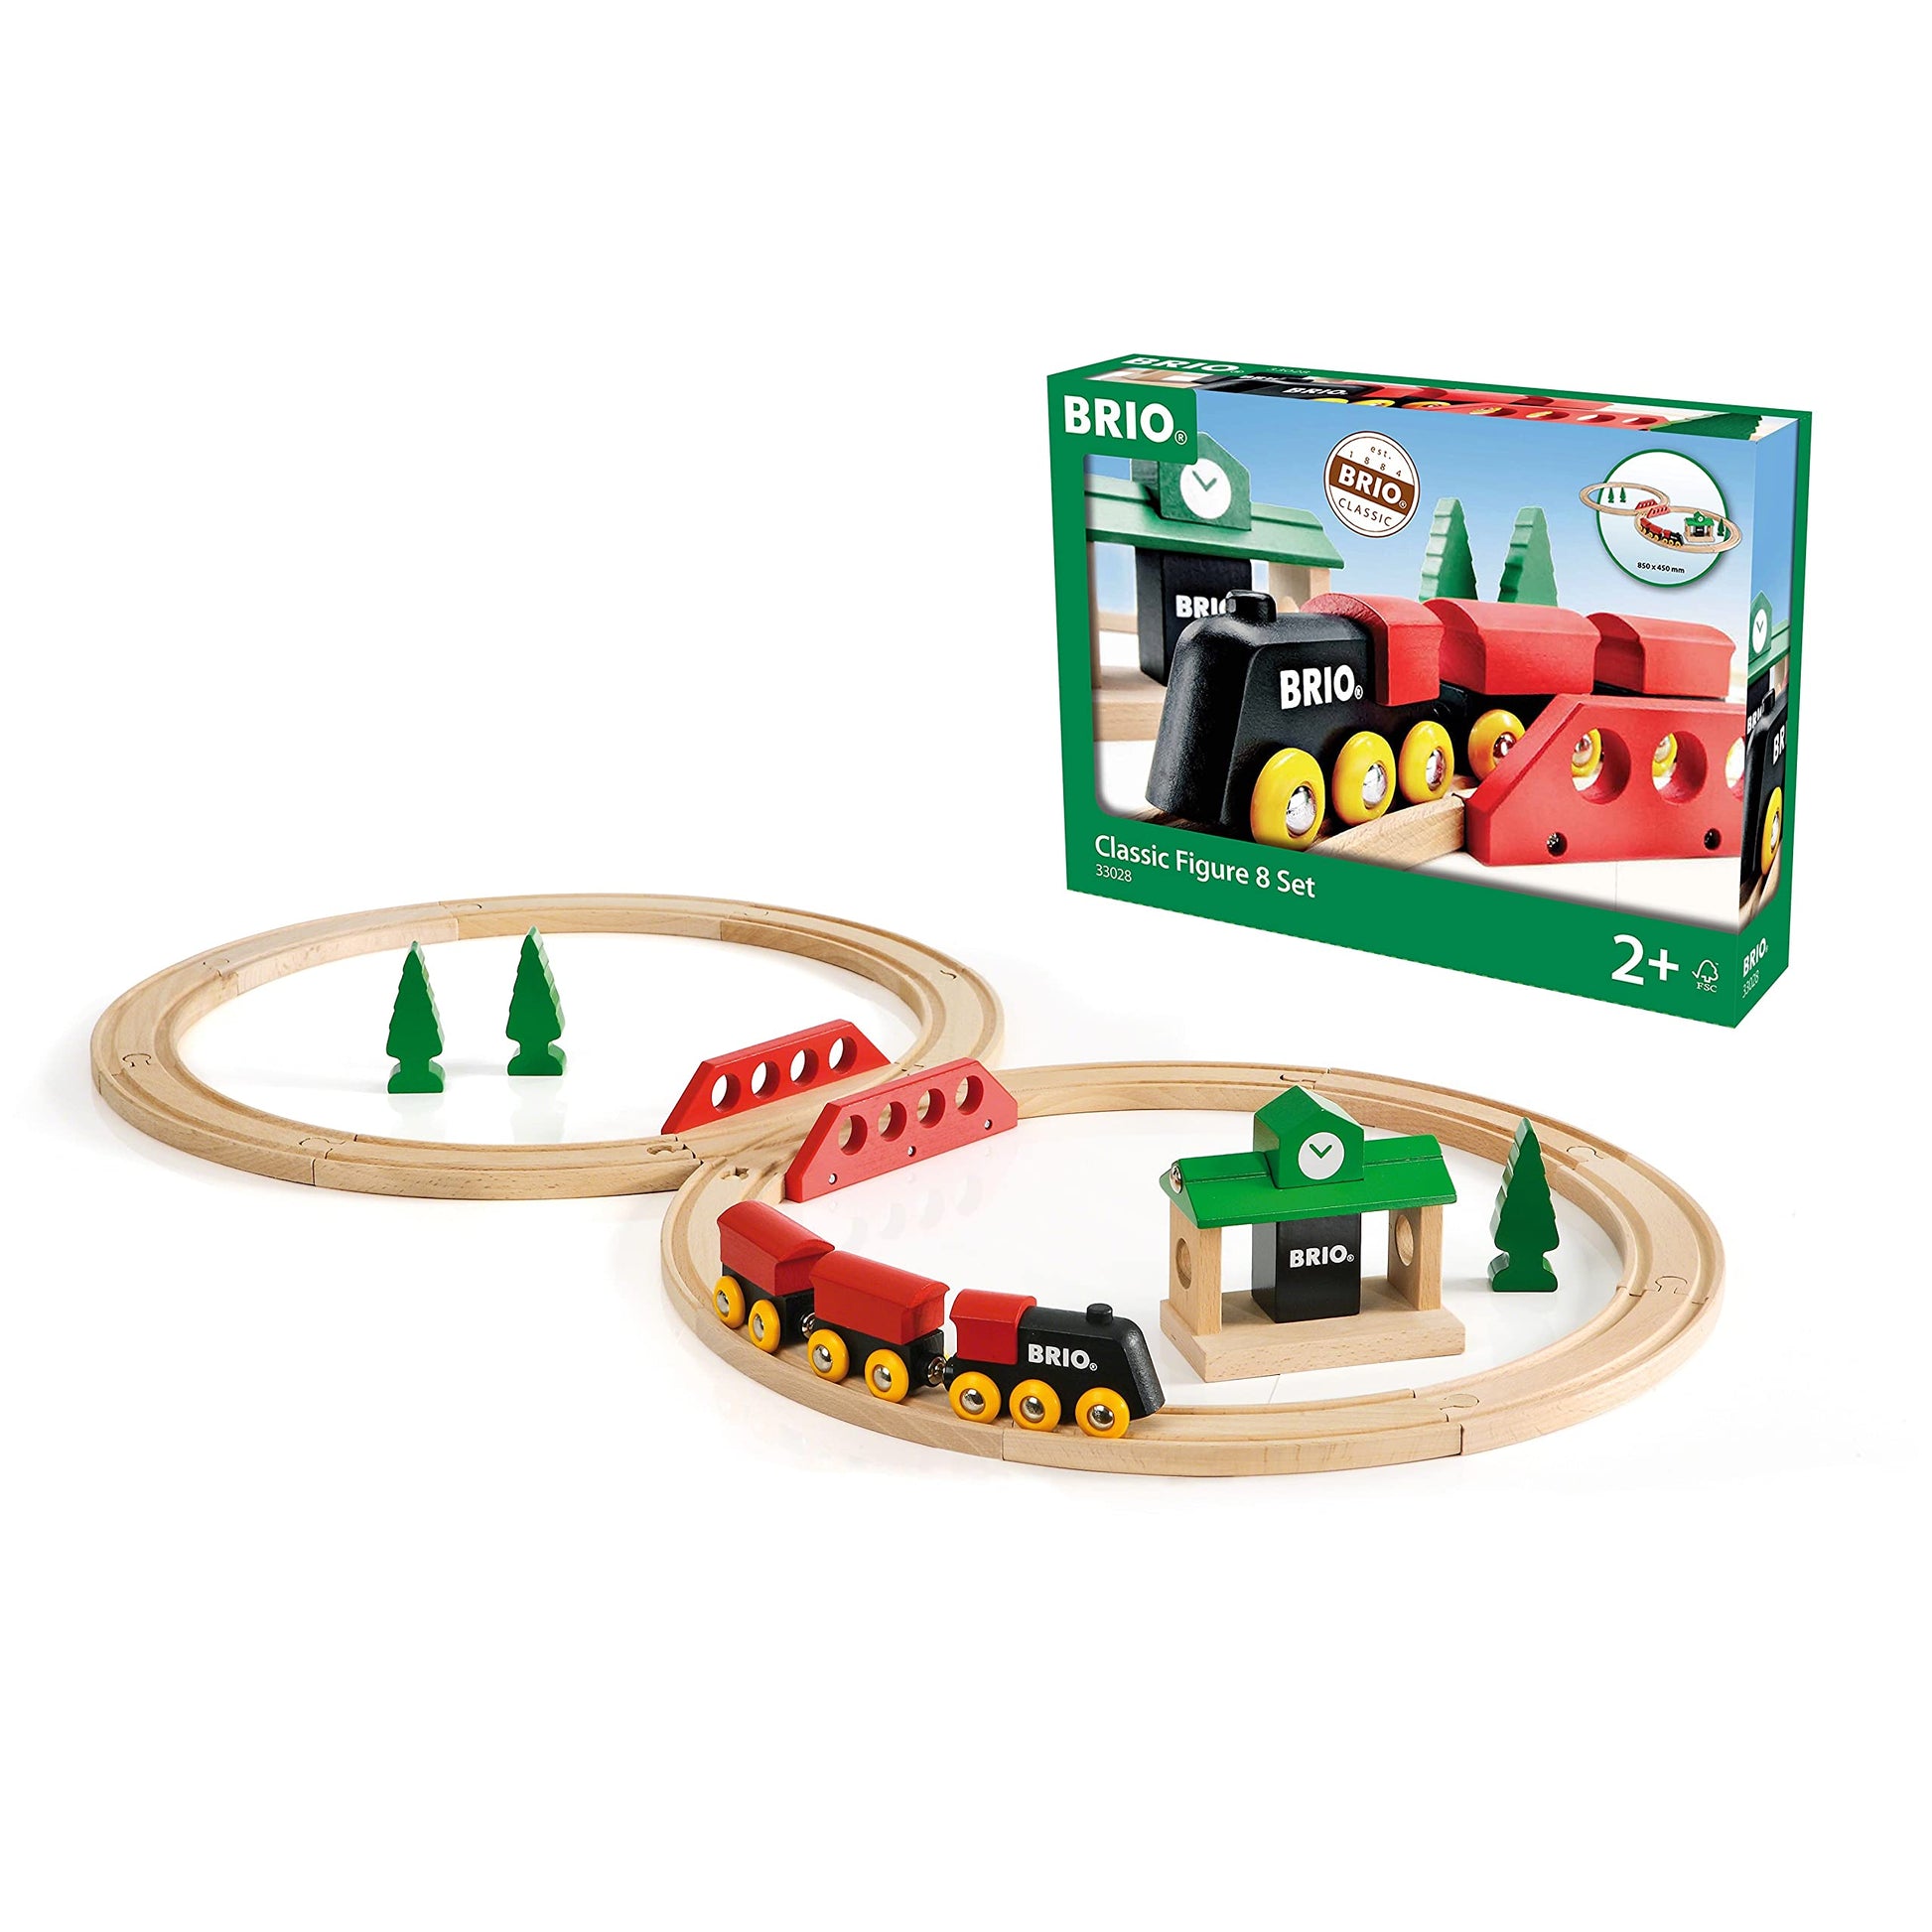 Deluxe Railway Set by BRIO - FUNdamentally Toys